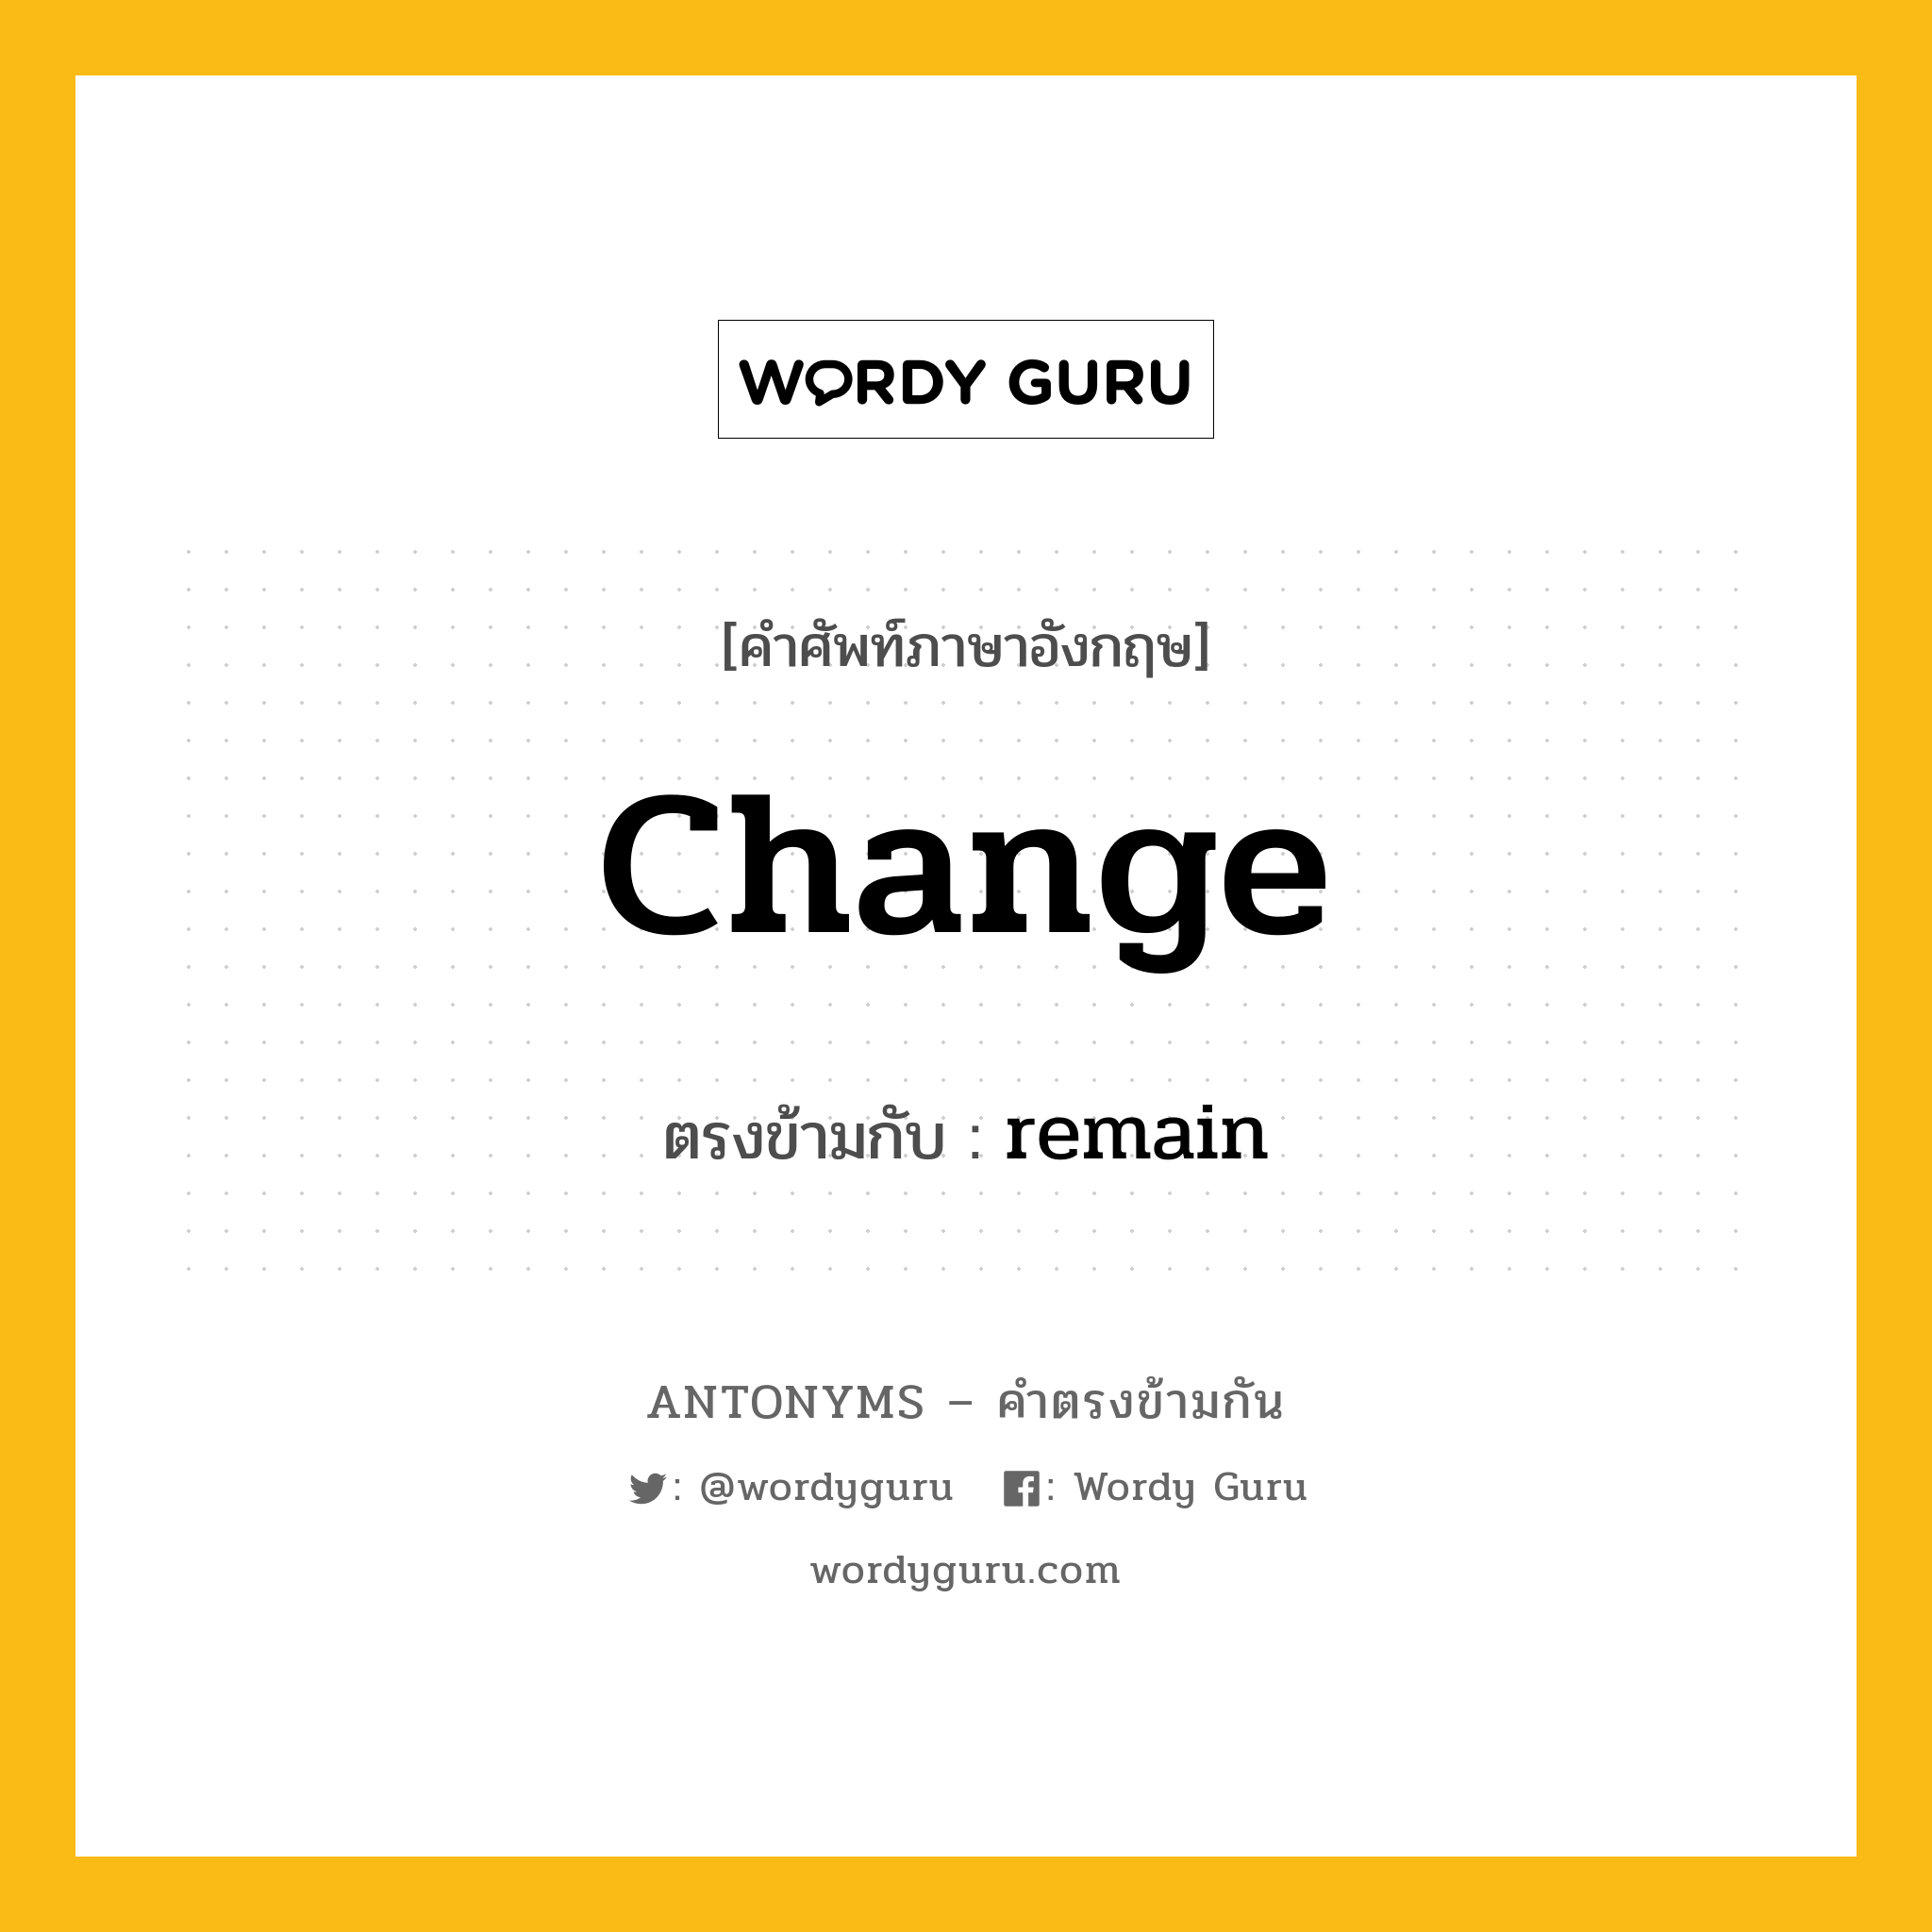 change เป็นคำตรงข้ามกับคำไหนบ้าง?, คำศัพท์ภาษาอังกฤษ change ตรงข้ามกับ remain หมวด remain